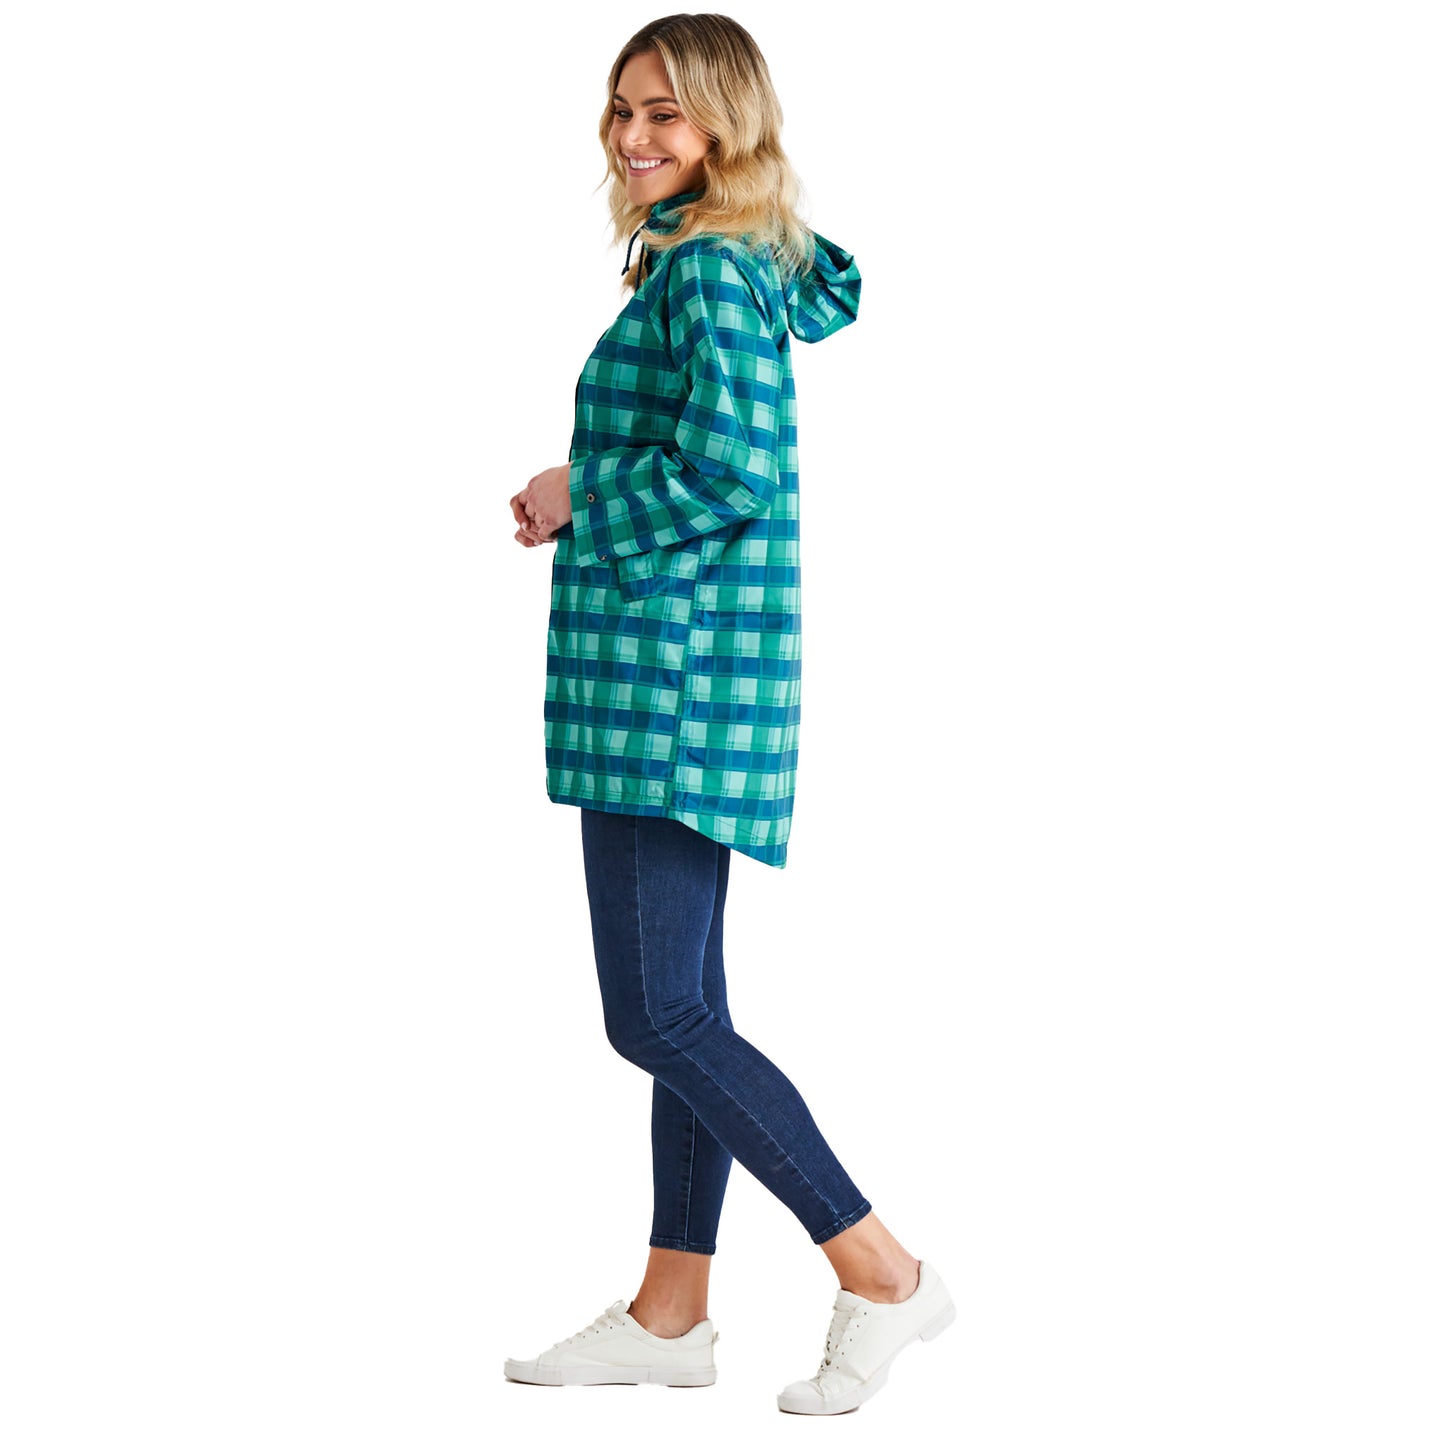 Rosie Relaxed Waterproof Raincoat - Green & Blue Tartan Check